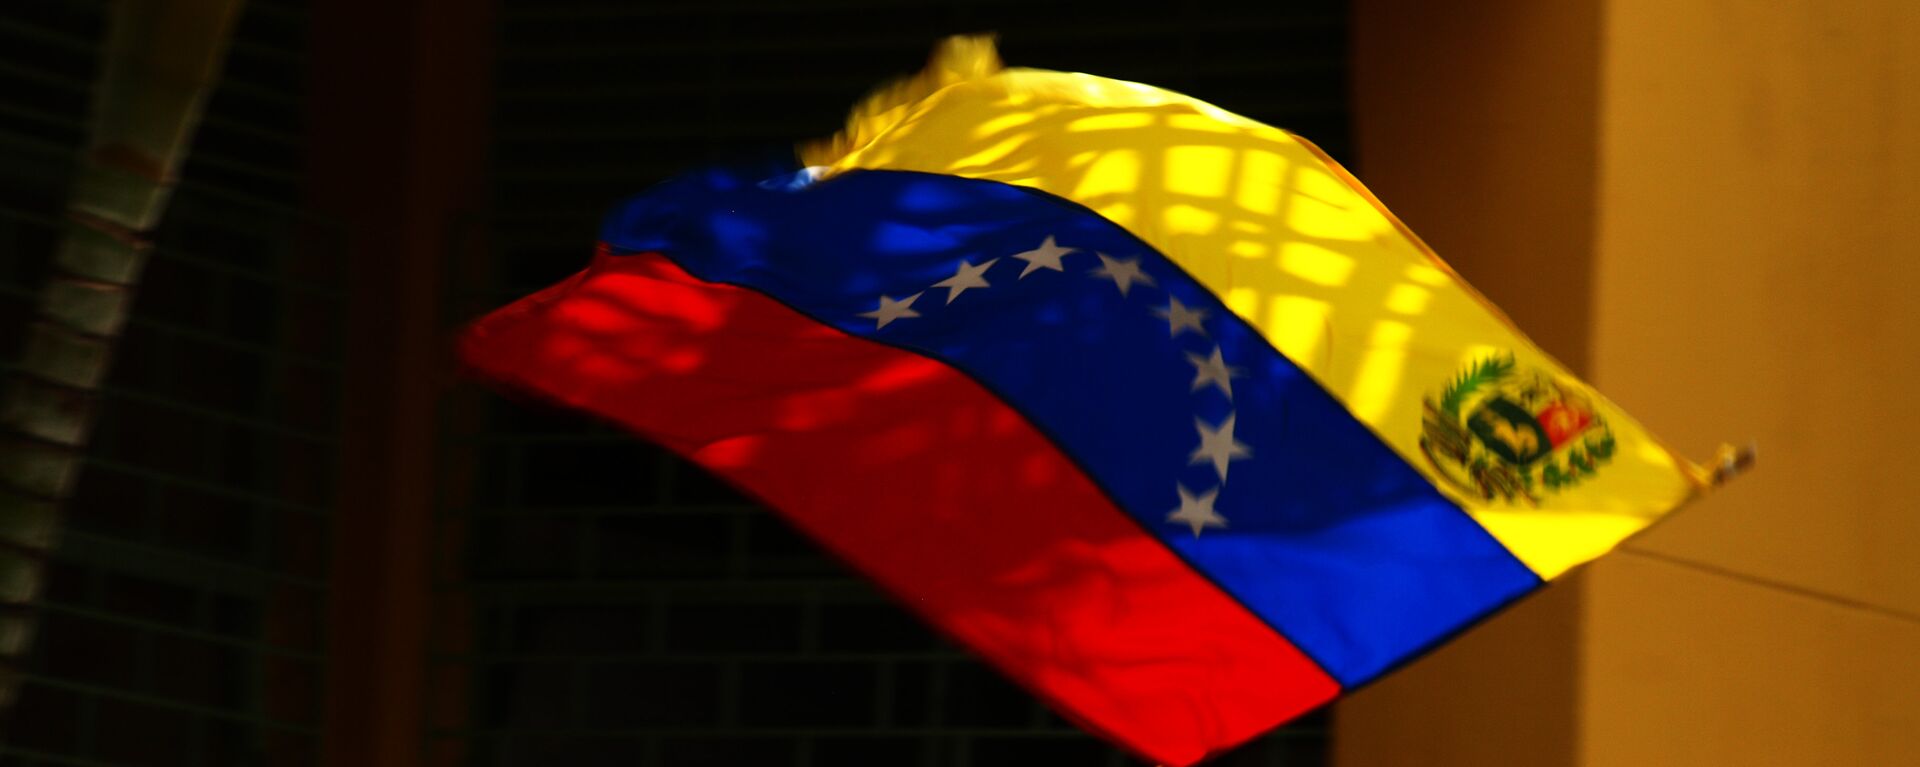 Bandera de Venezuela - Sputnik Mundo, 1920, 11.03.2021